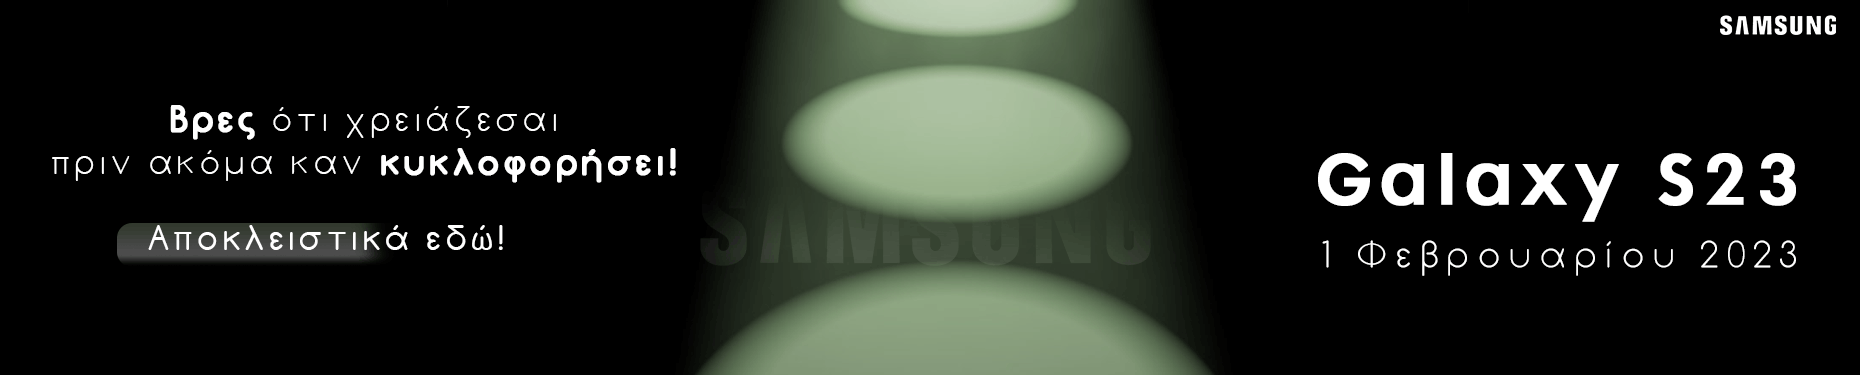 Samsung s23 category